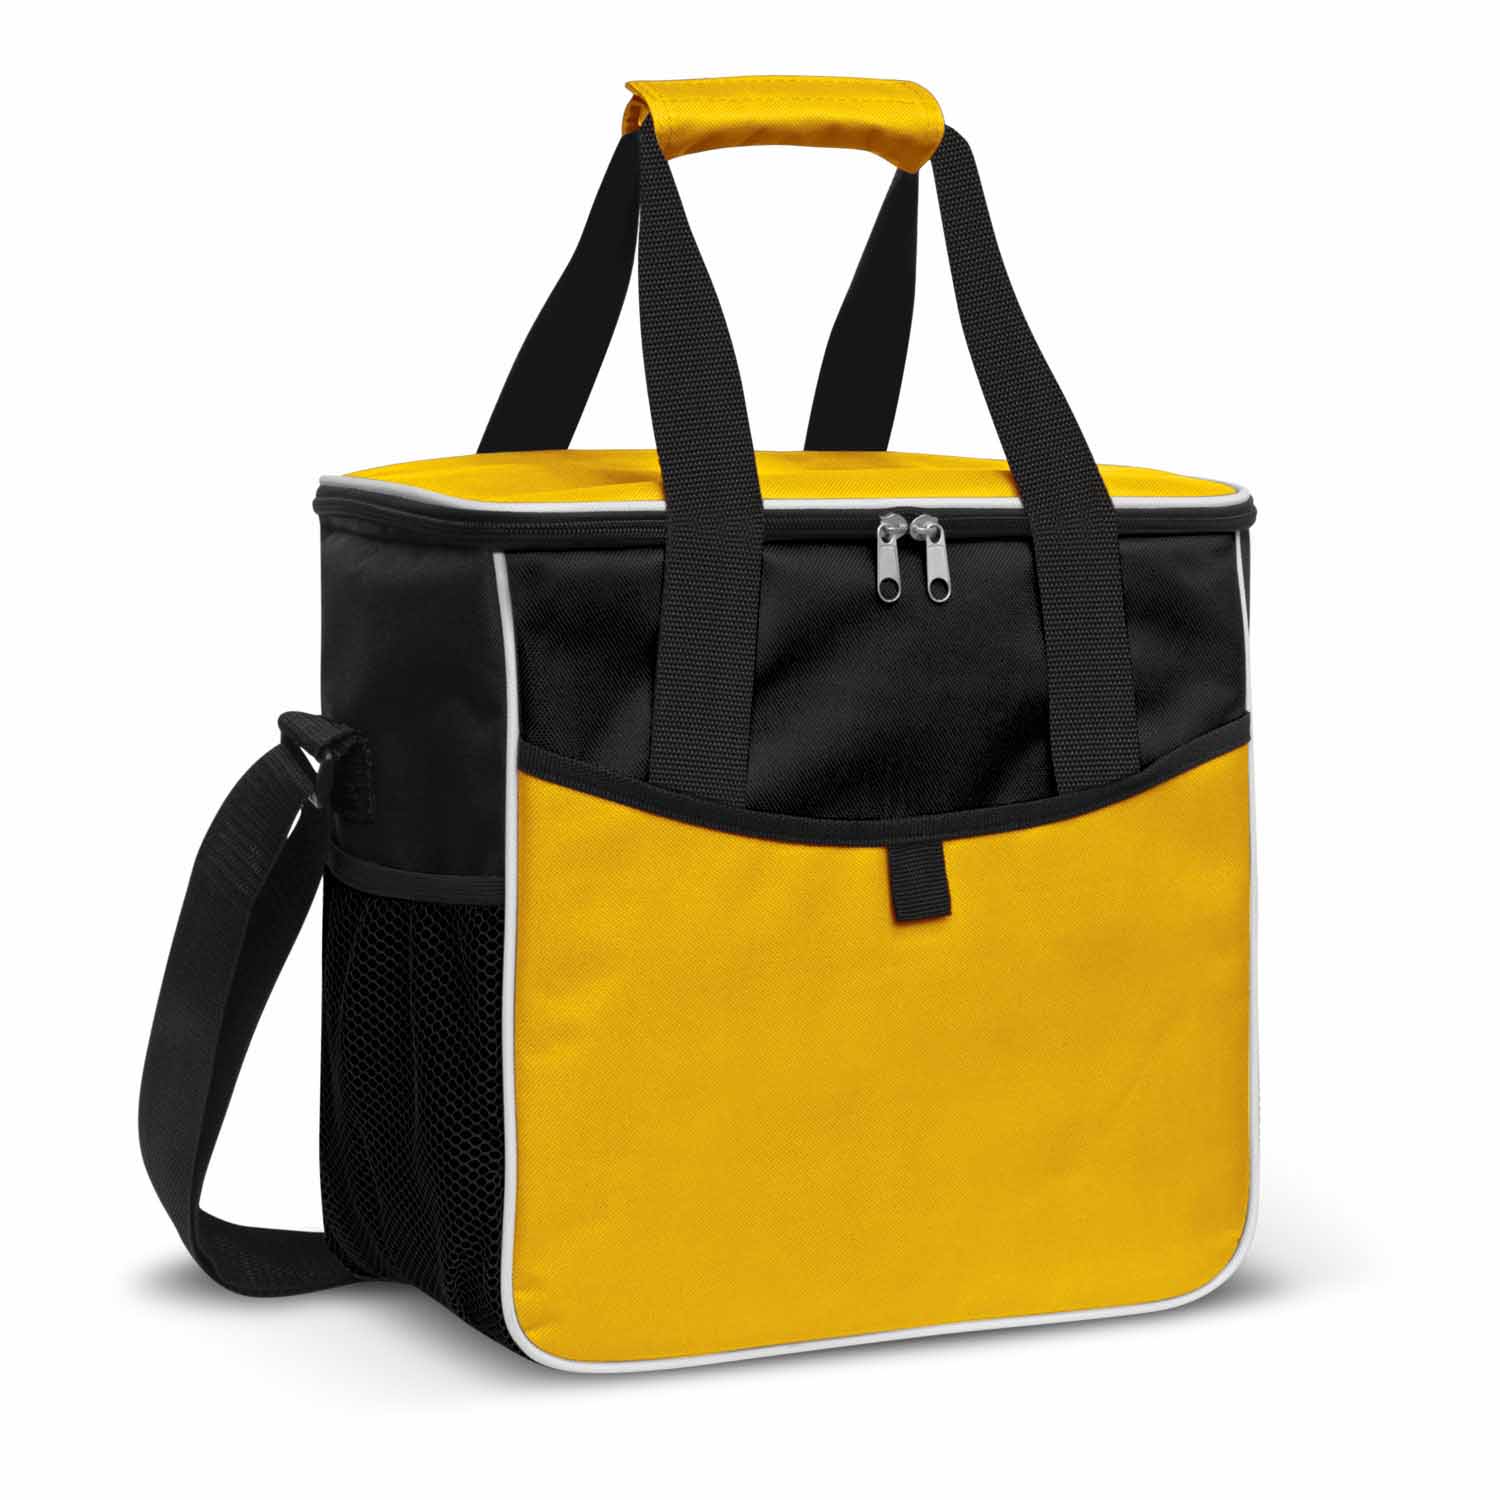 Buy Yellow Nordic Cooler Bags Online in Perth